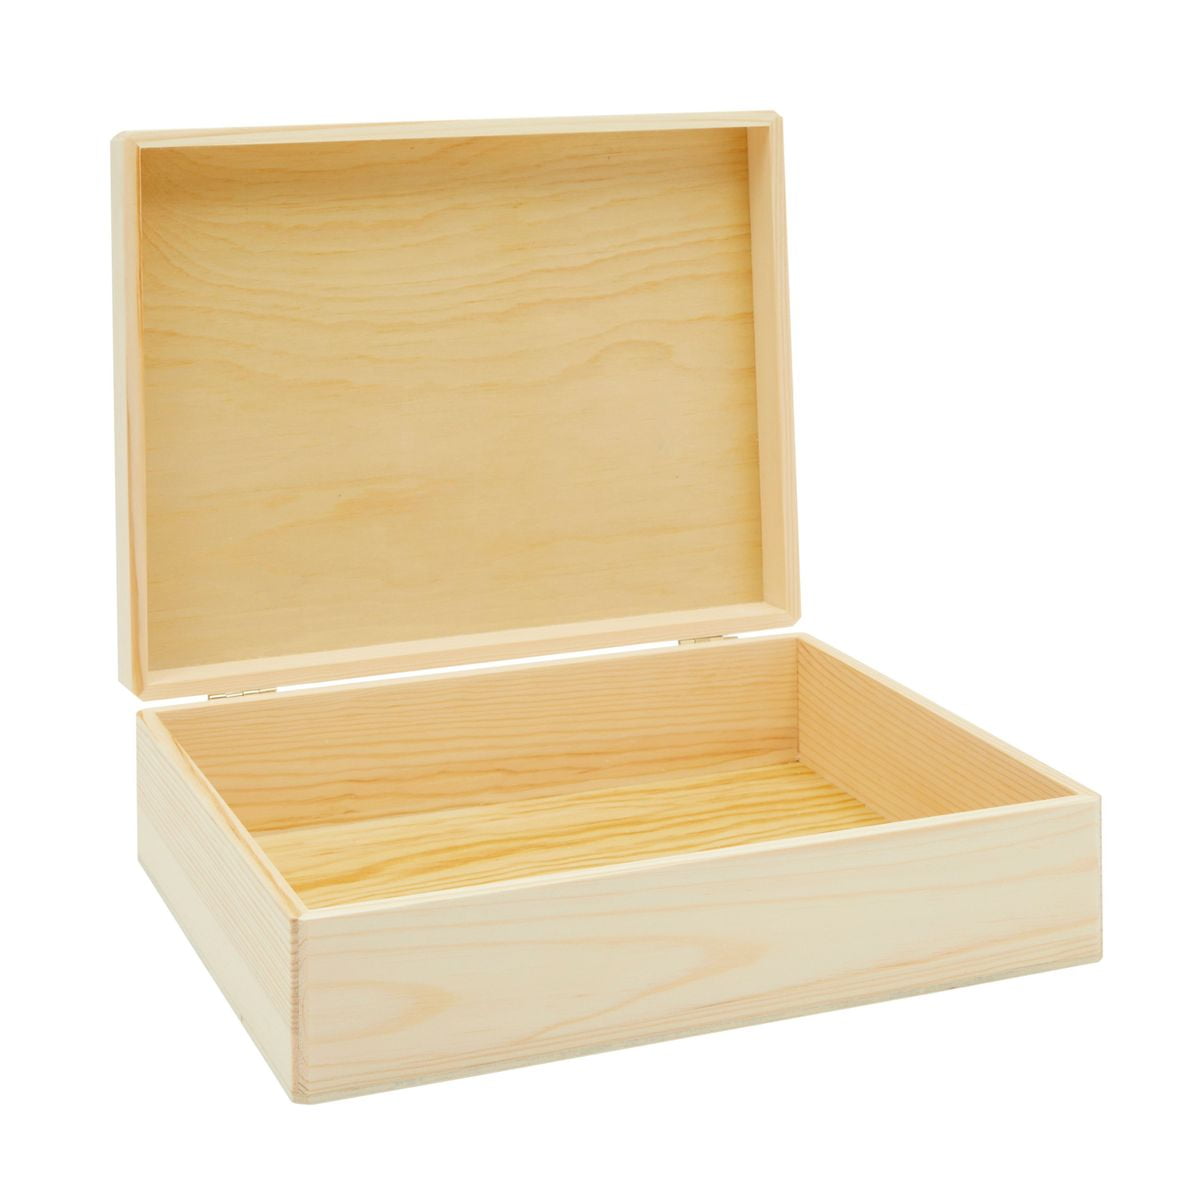 1 x Plain Wooden Natural Jewellery Chest Keepsake Box Trinket Storage KFR Large 